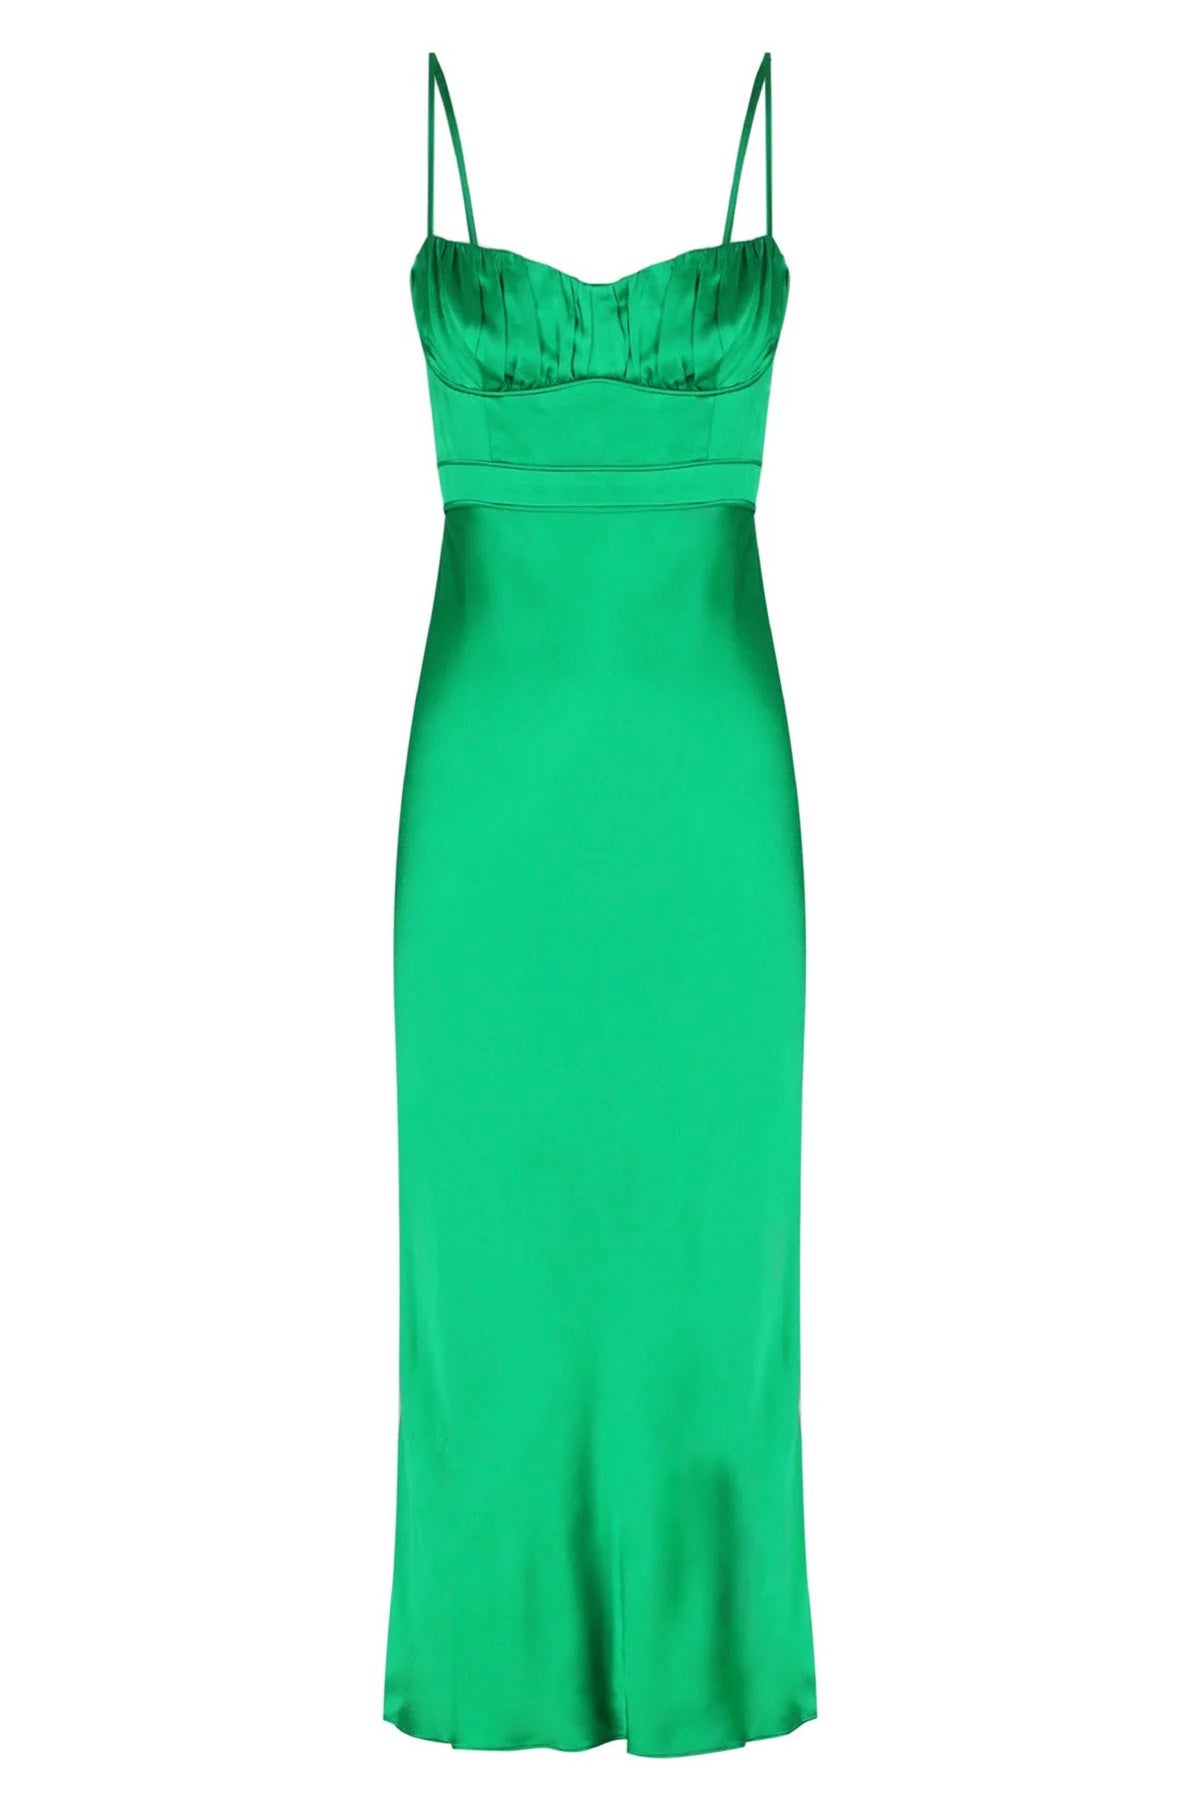 Shona Joy - Lana Corded Ruched Midi Dress in Tree Green | All The Dresses